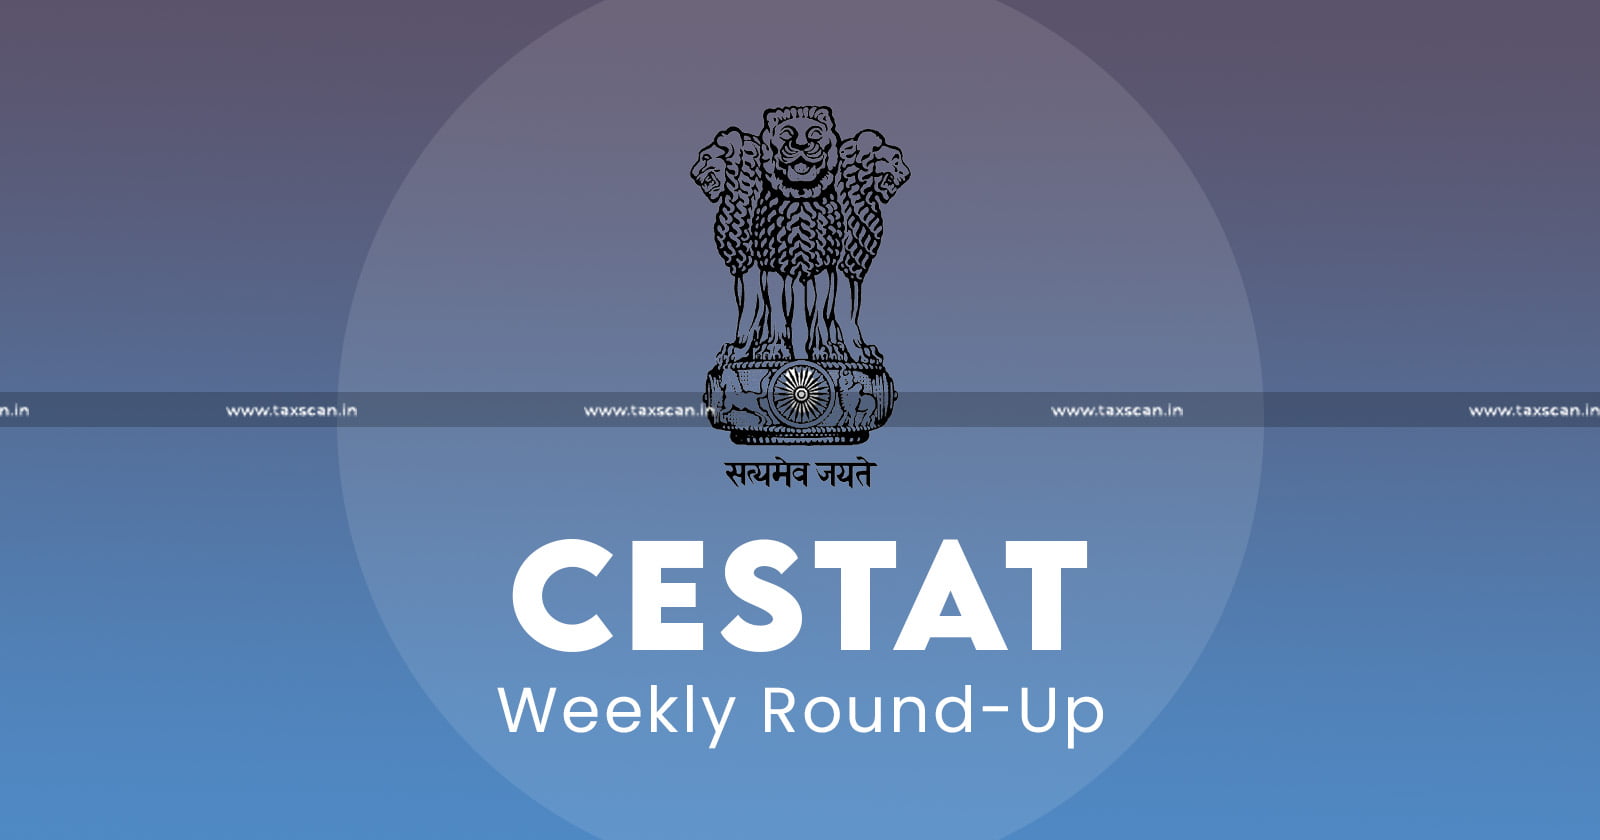 CESTAT Weekly Round-Up - Weekly Round-Up - CESTAT - Round-Up - Taxscan